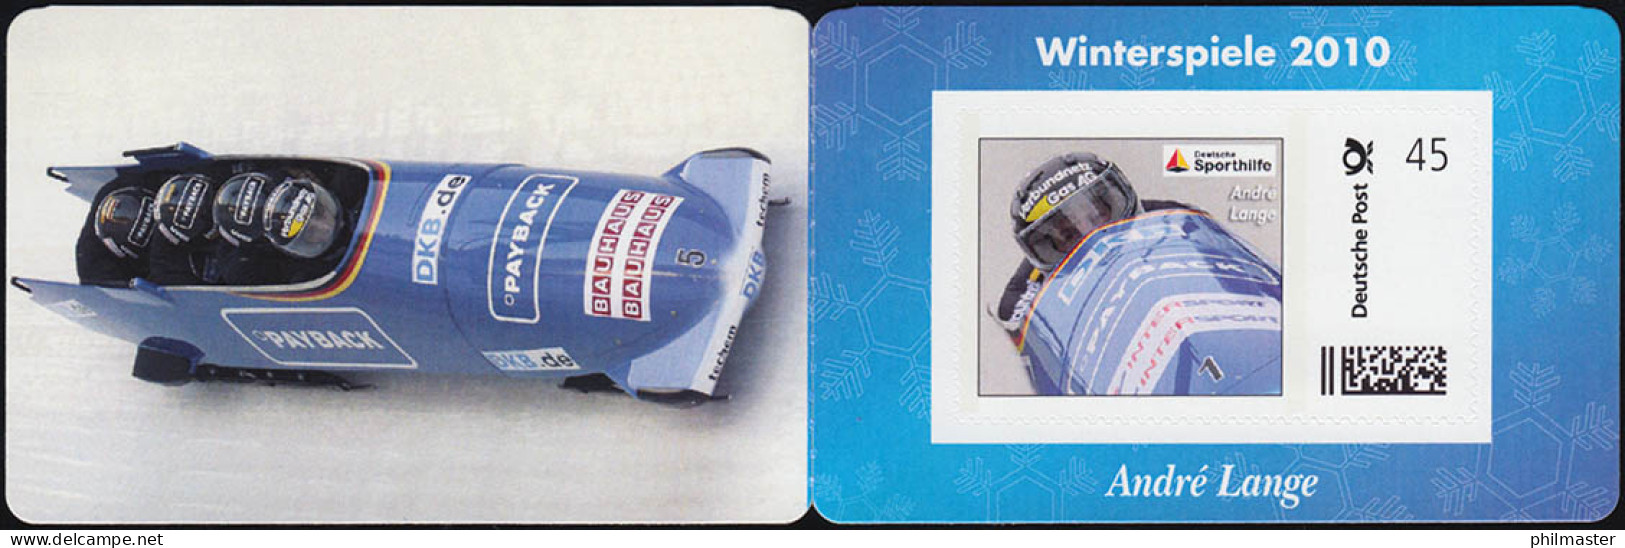 Sporthilfe: Winterspiele 2010 Portocard Bobsport Andre Lange,selbstklebend, ** - Hiver